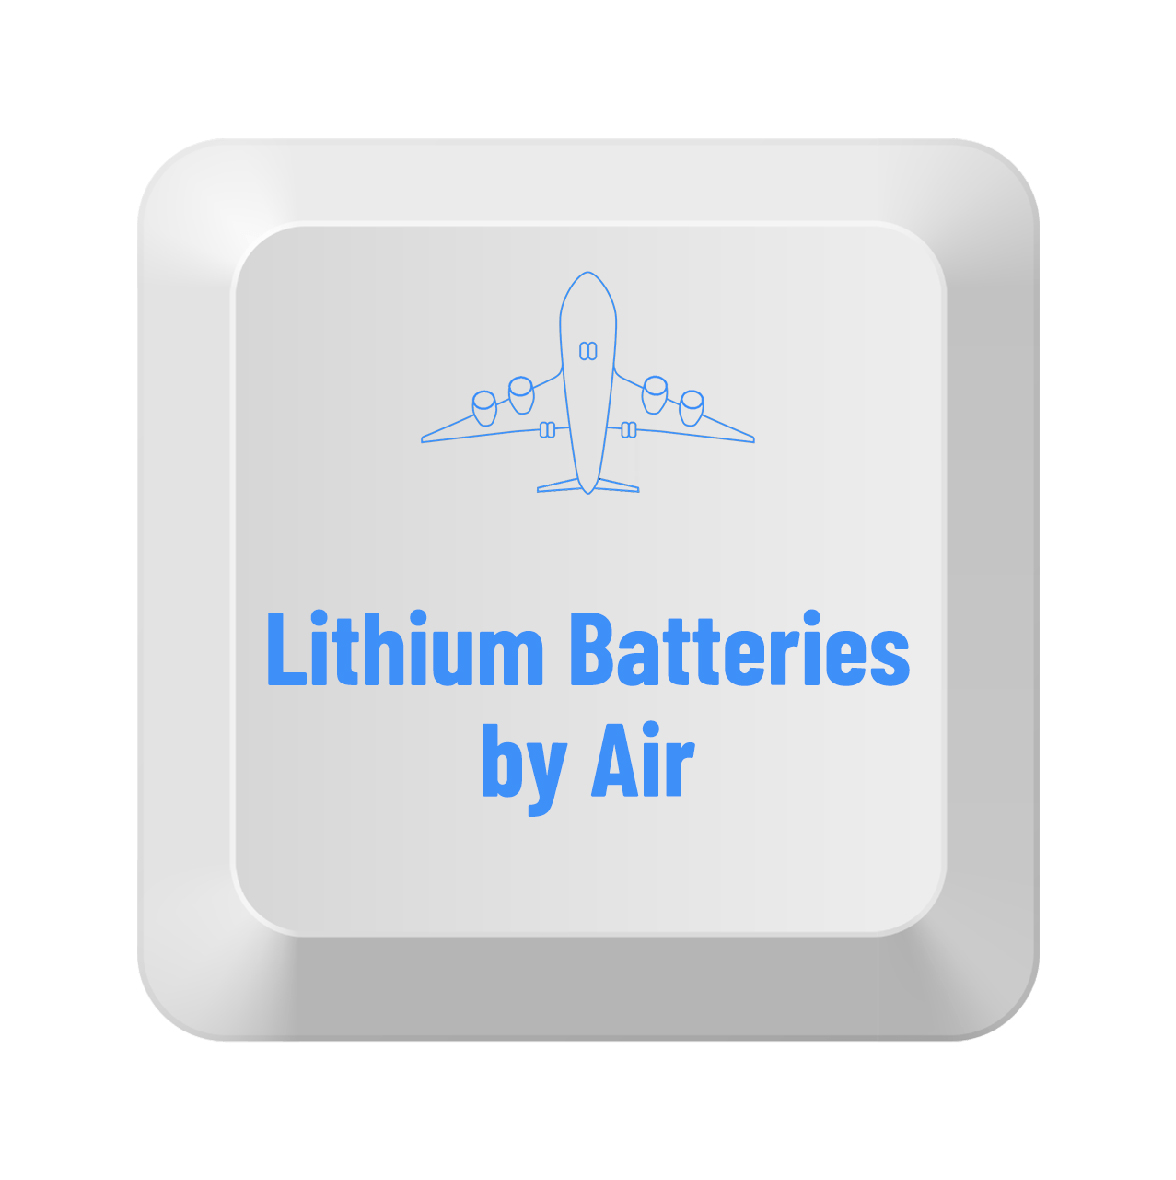 Lithium Batteries by Air